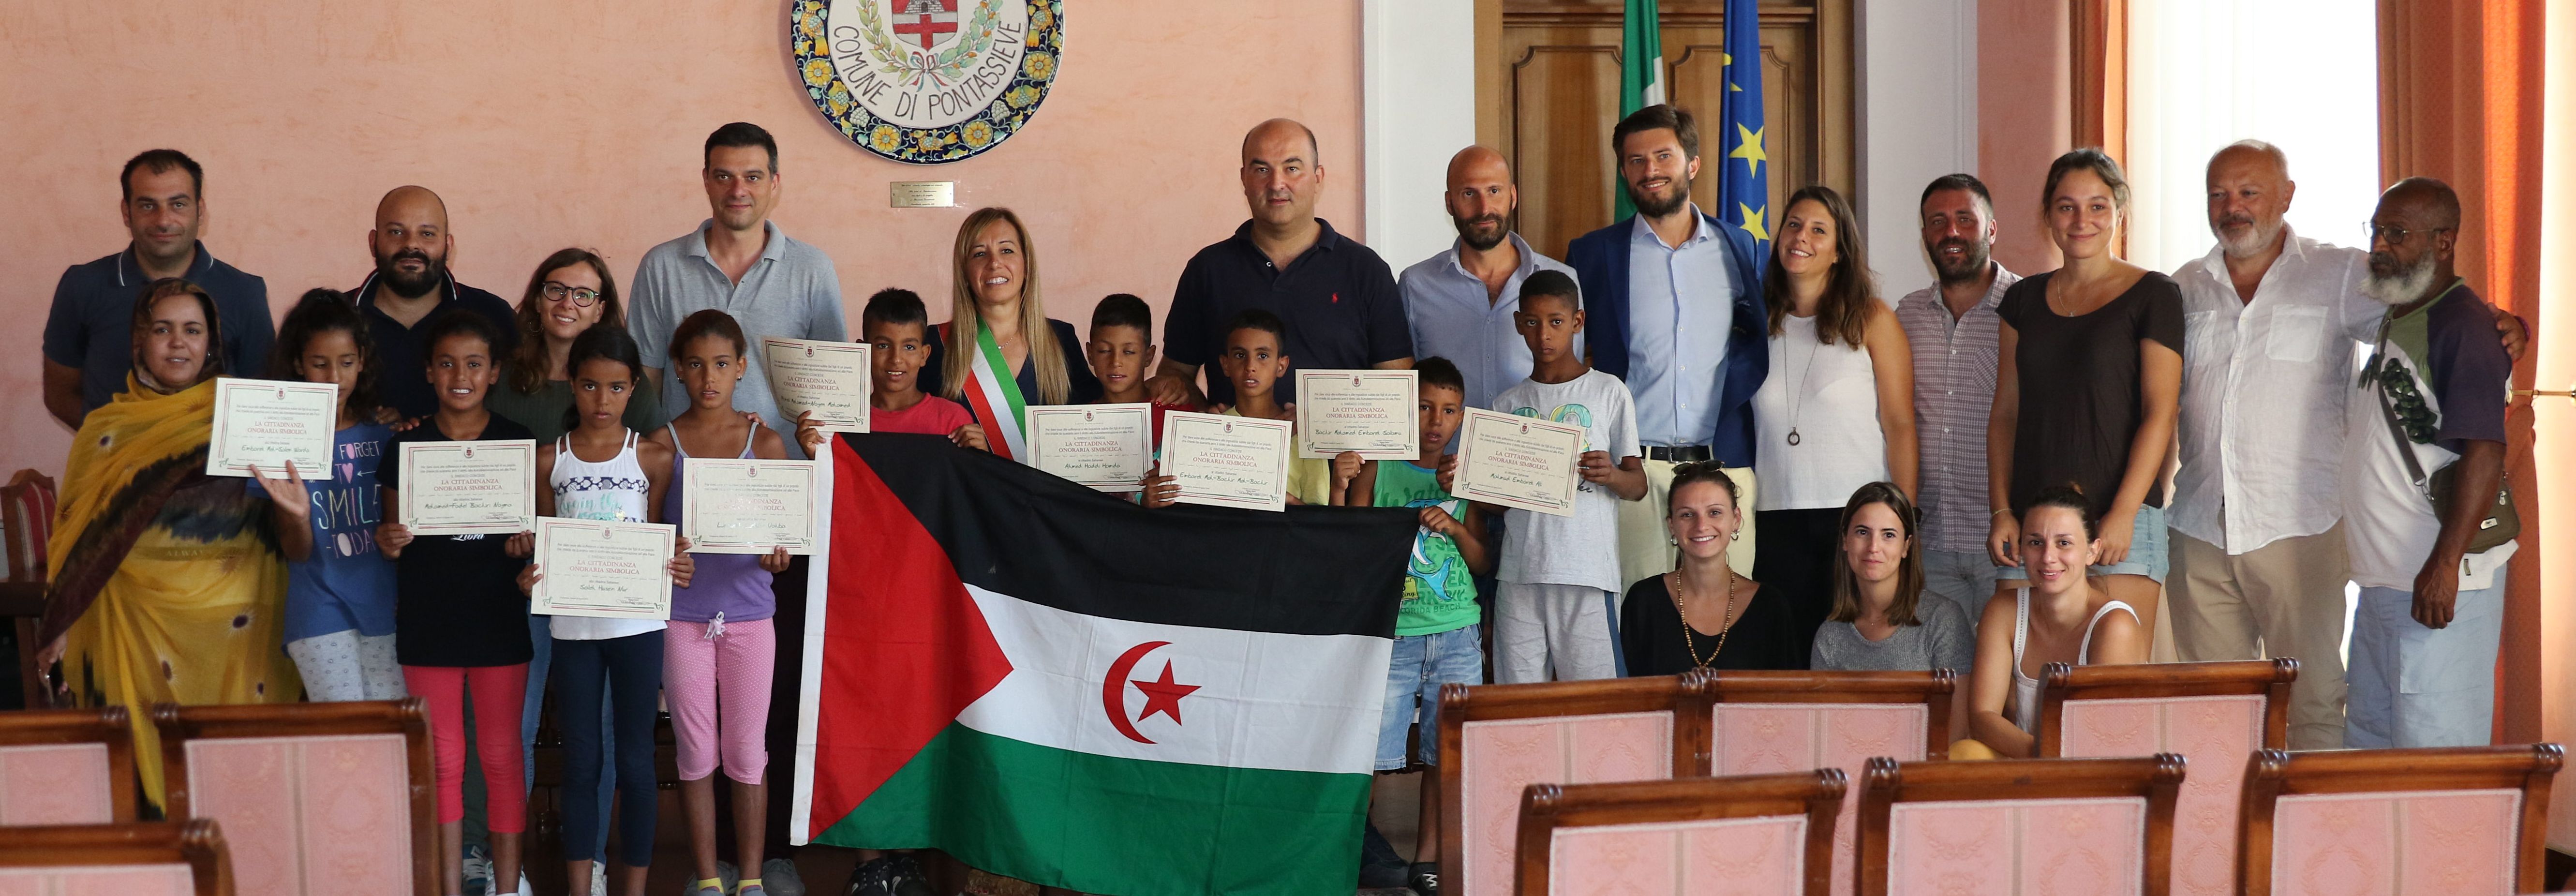 Pontassieve. Piccoli ambasciatori di pace: Consegnata la cittadinanza onoraria simbolica ai Saharawi.